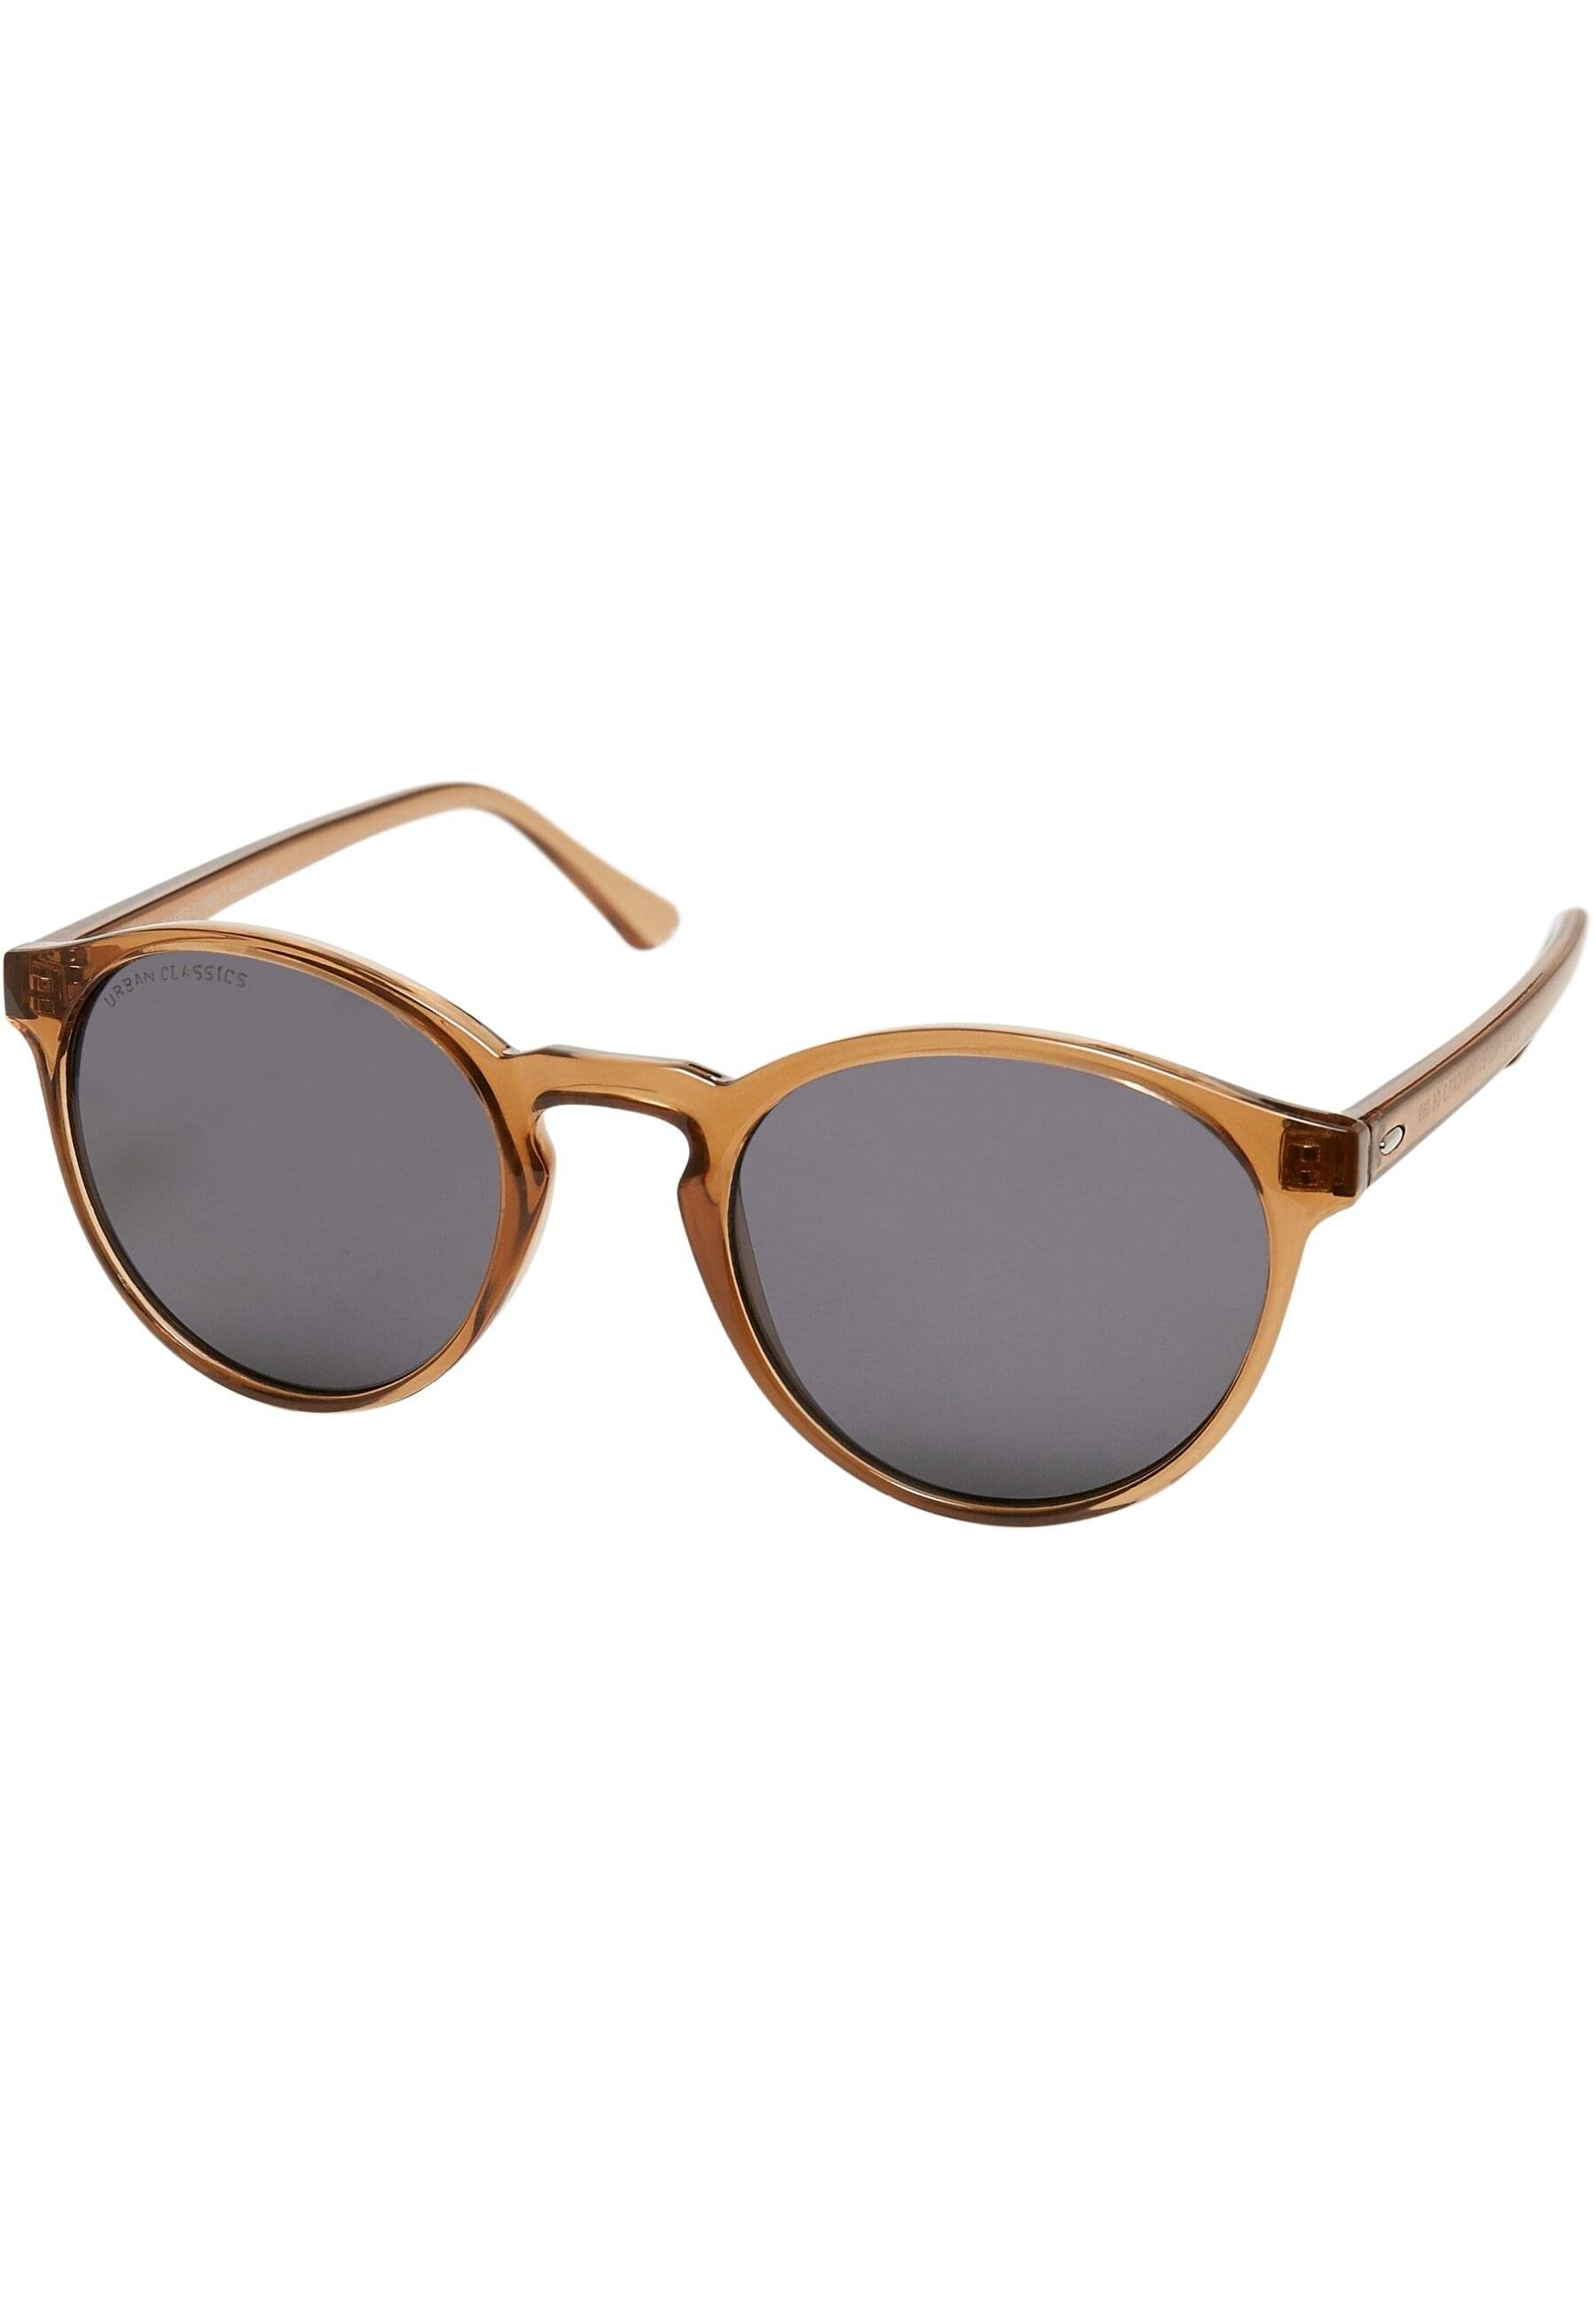 Cypress 3-Pack black+brown+blue Sonnenbrille Sunglasses Unisex CLASSICS URBAN